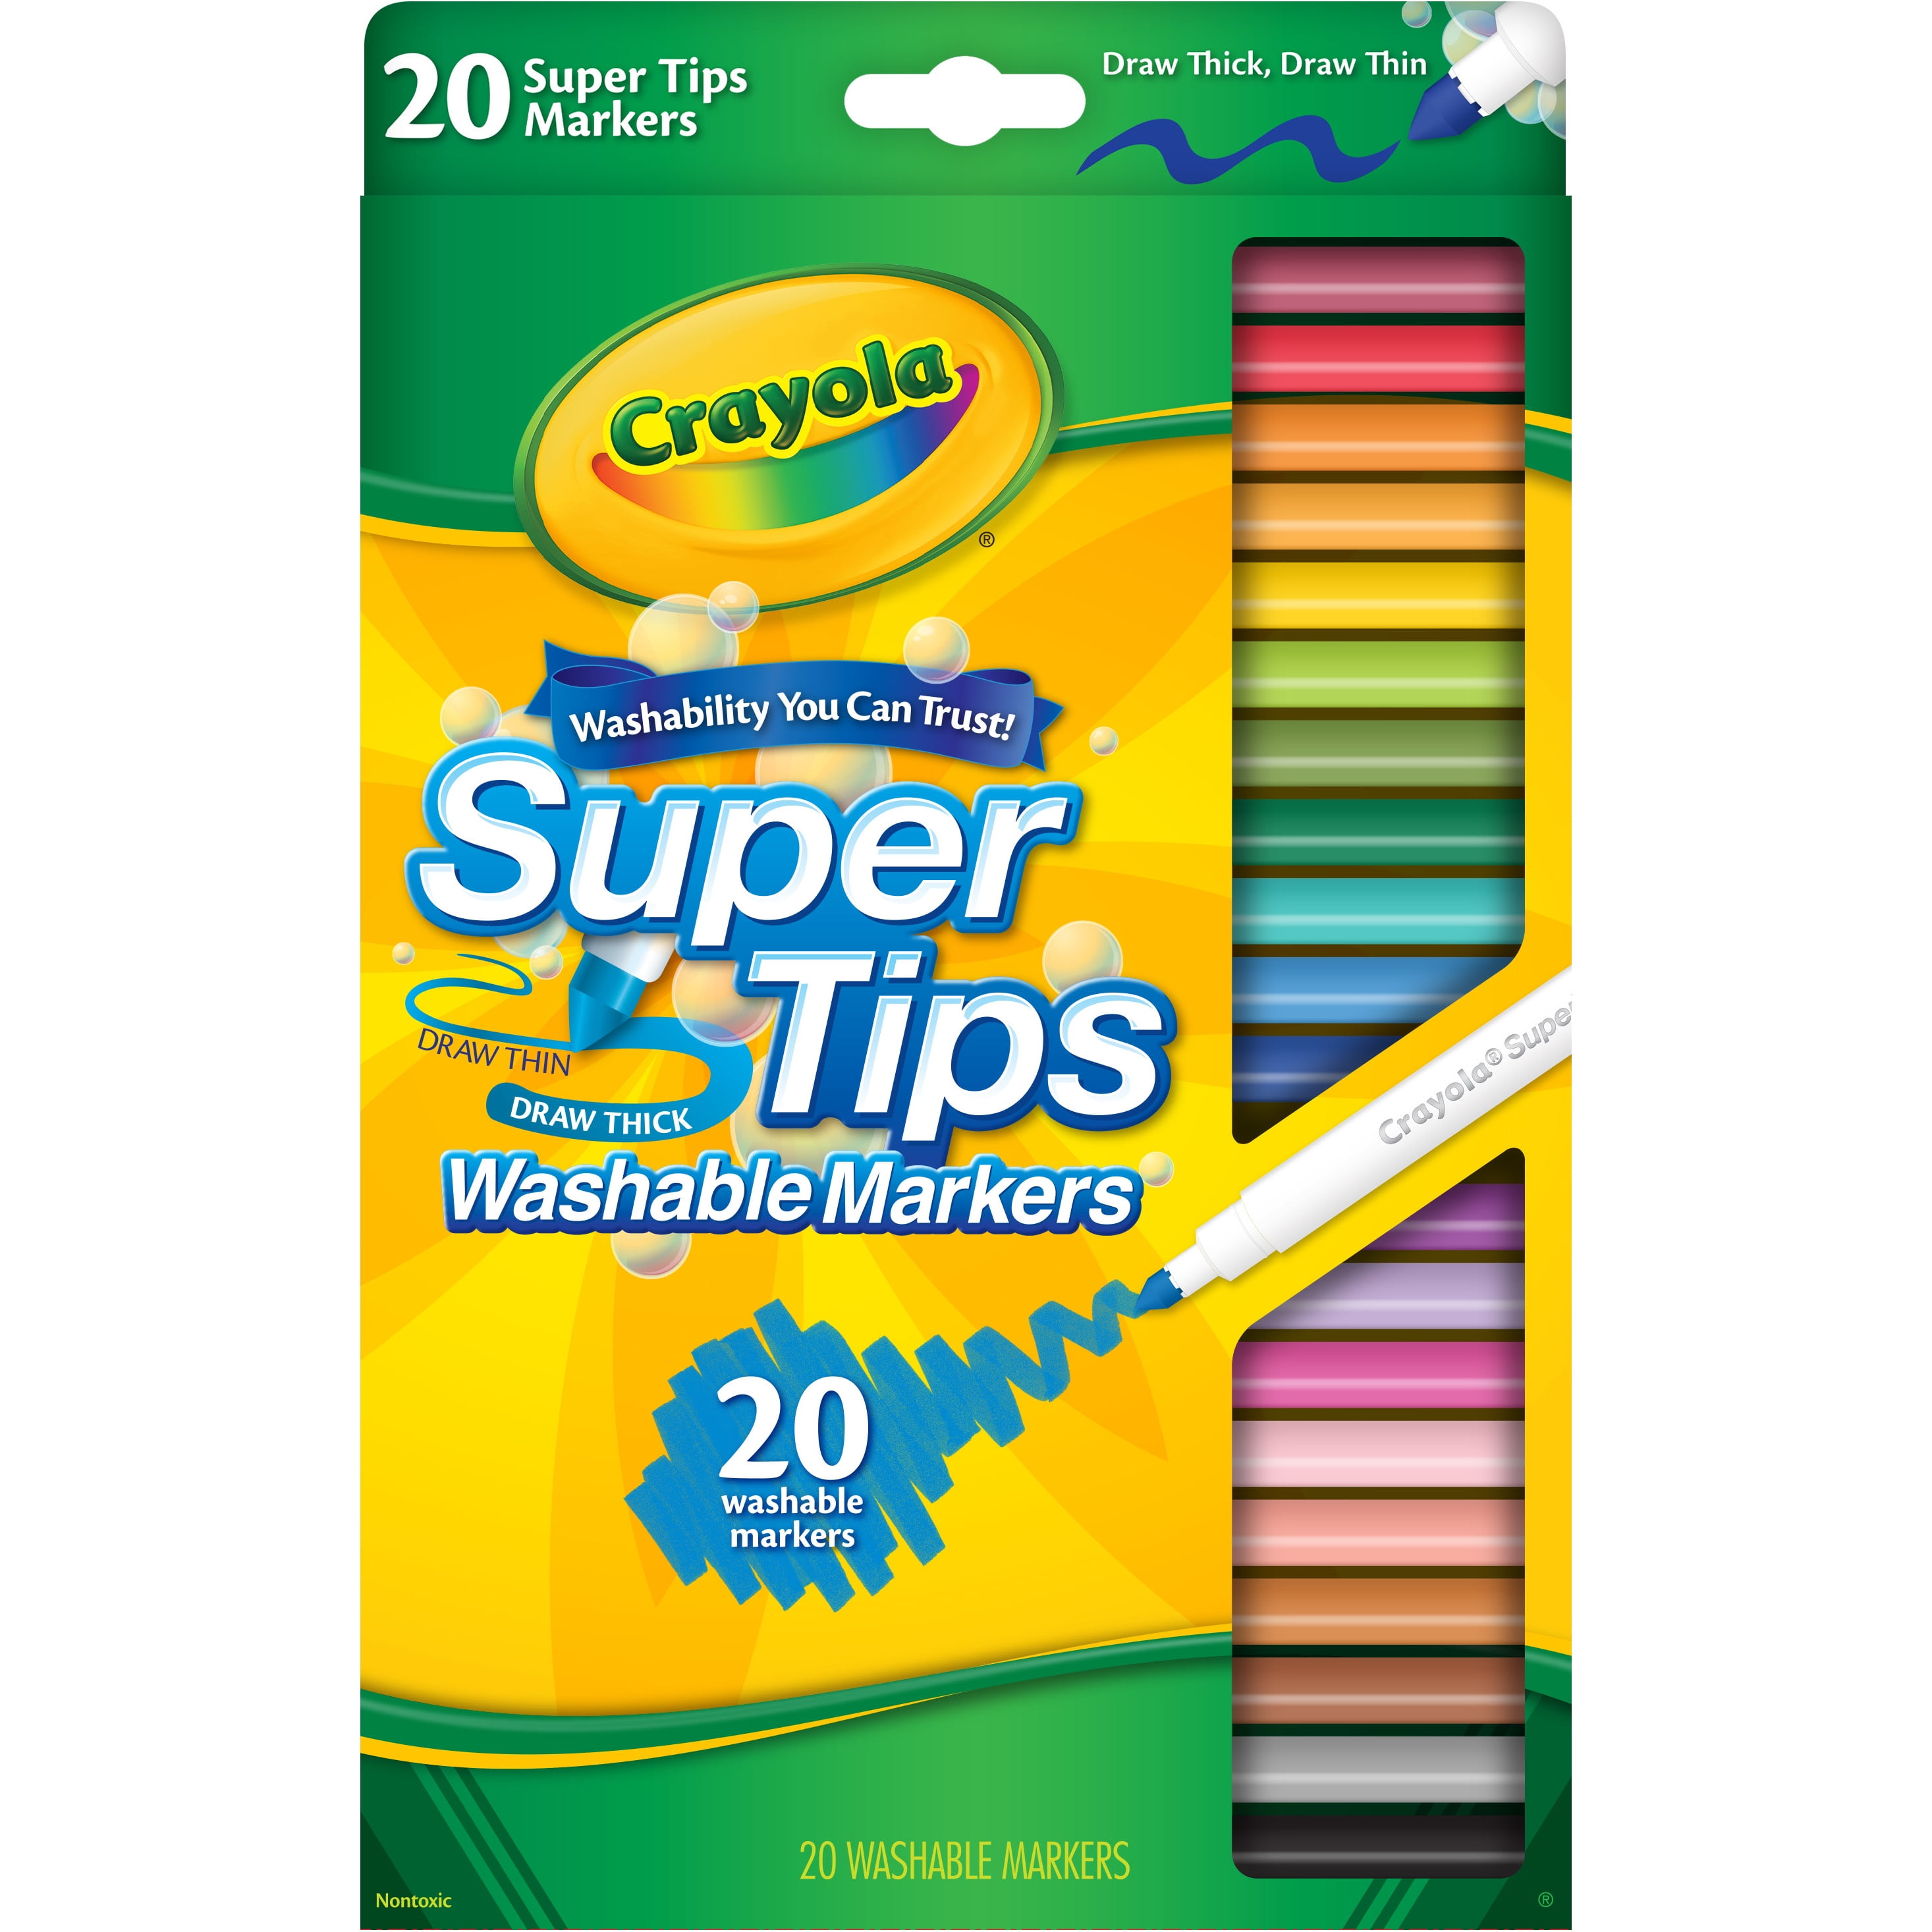 Supertips Markers Coloring Pencils Activity Sets Crayola Crayons Chalk 